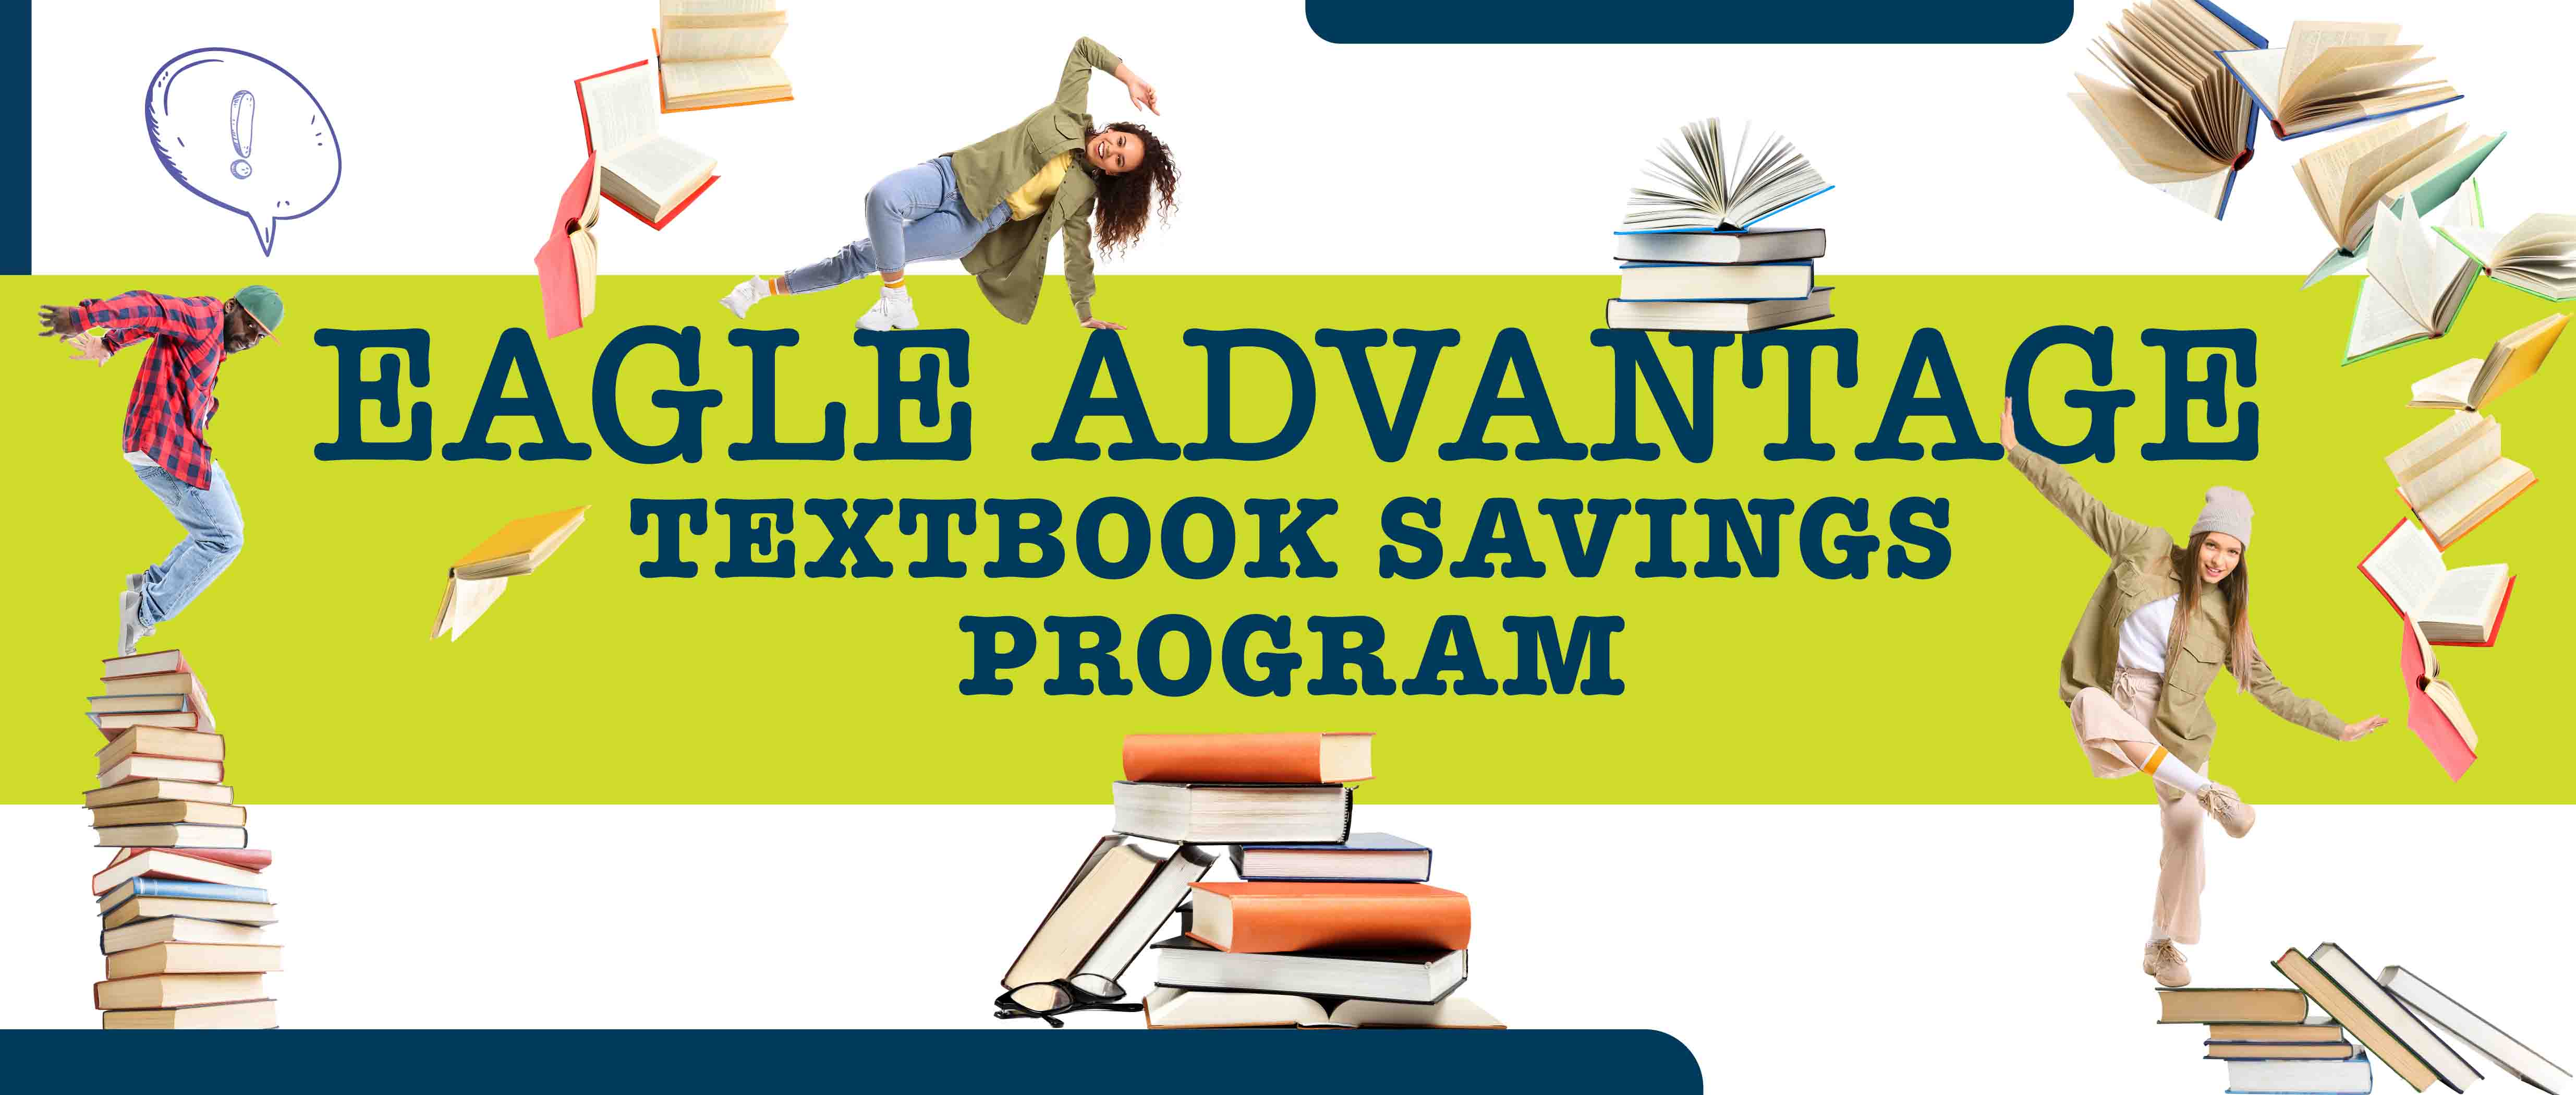 Eagle Advantage Textbook Savings Program graphic